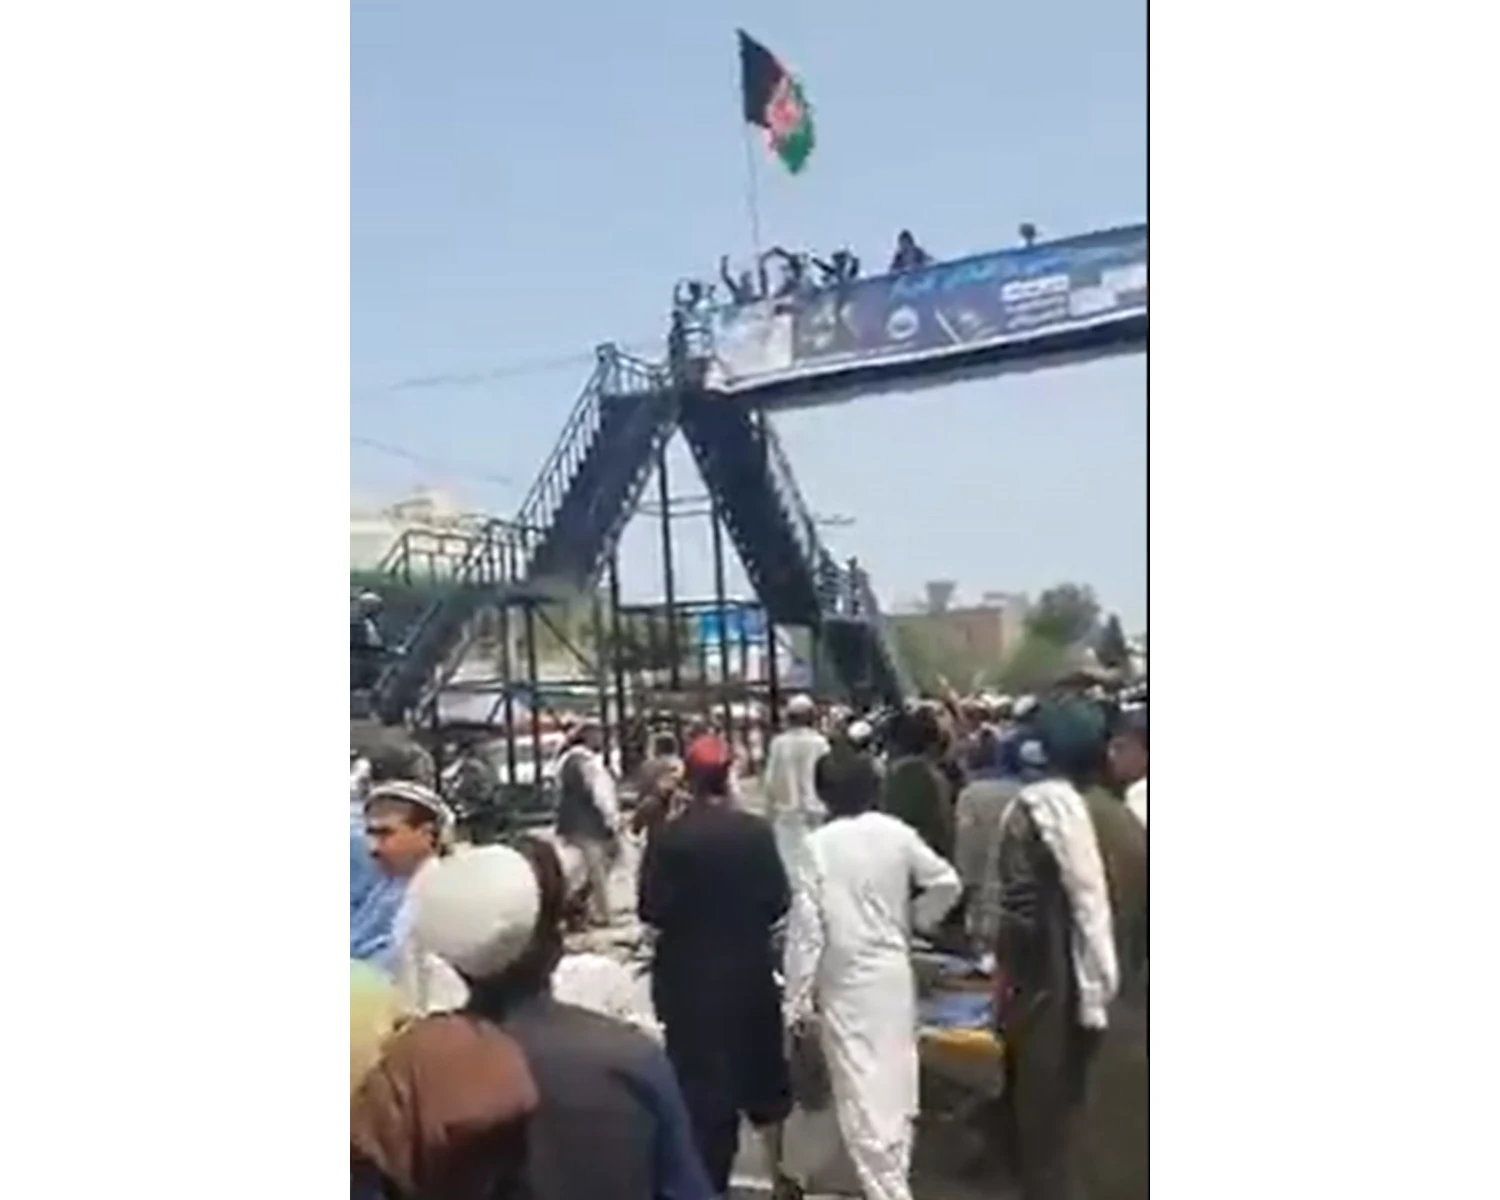 Taliban fire on demonstrators in Jalalabad